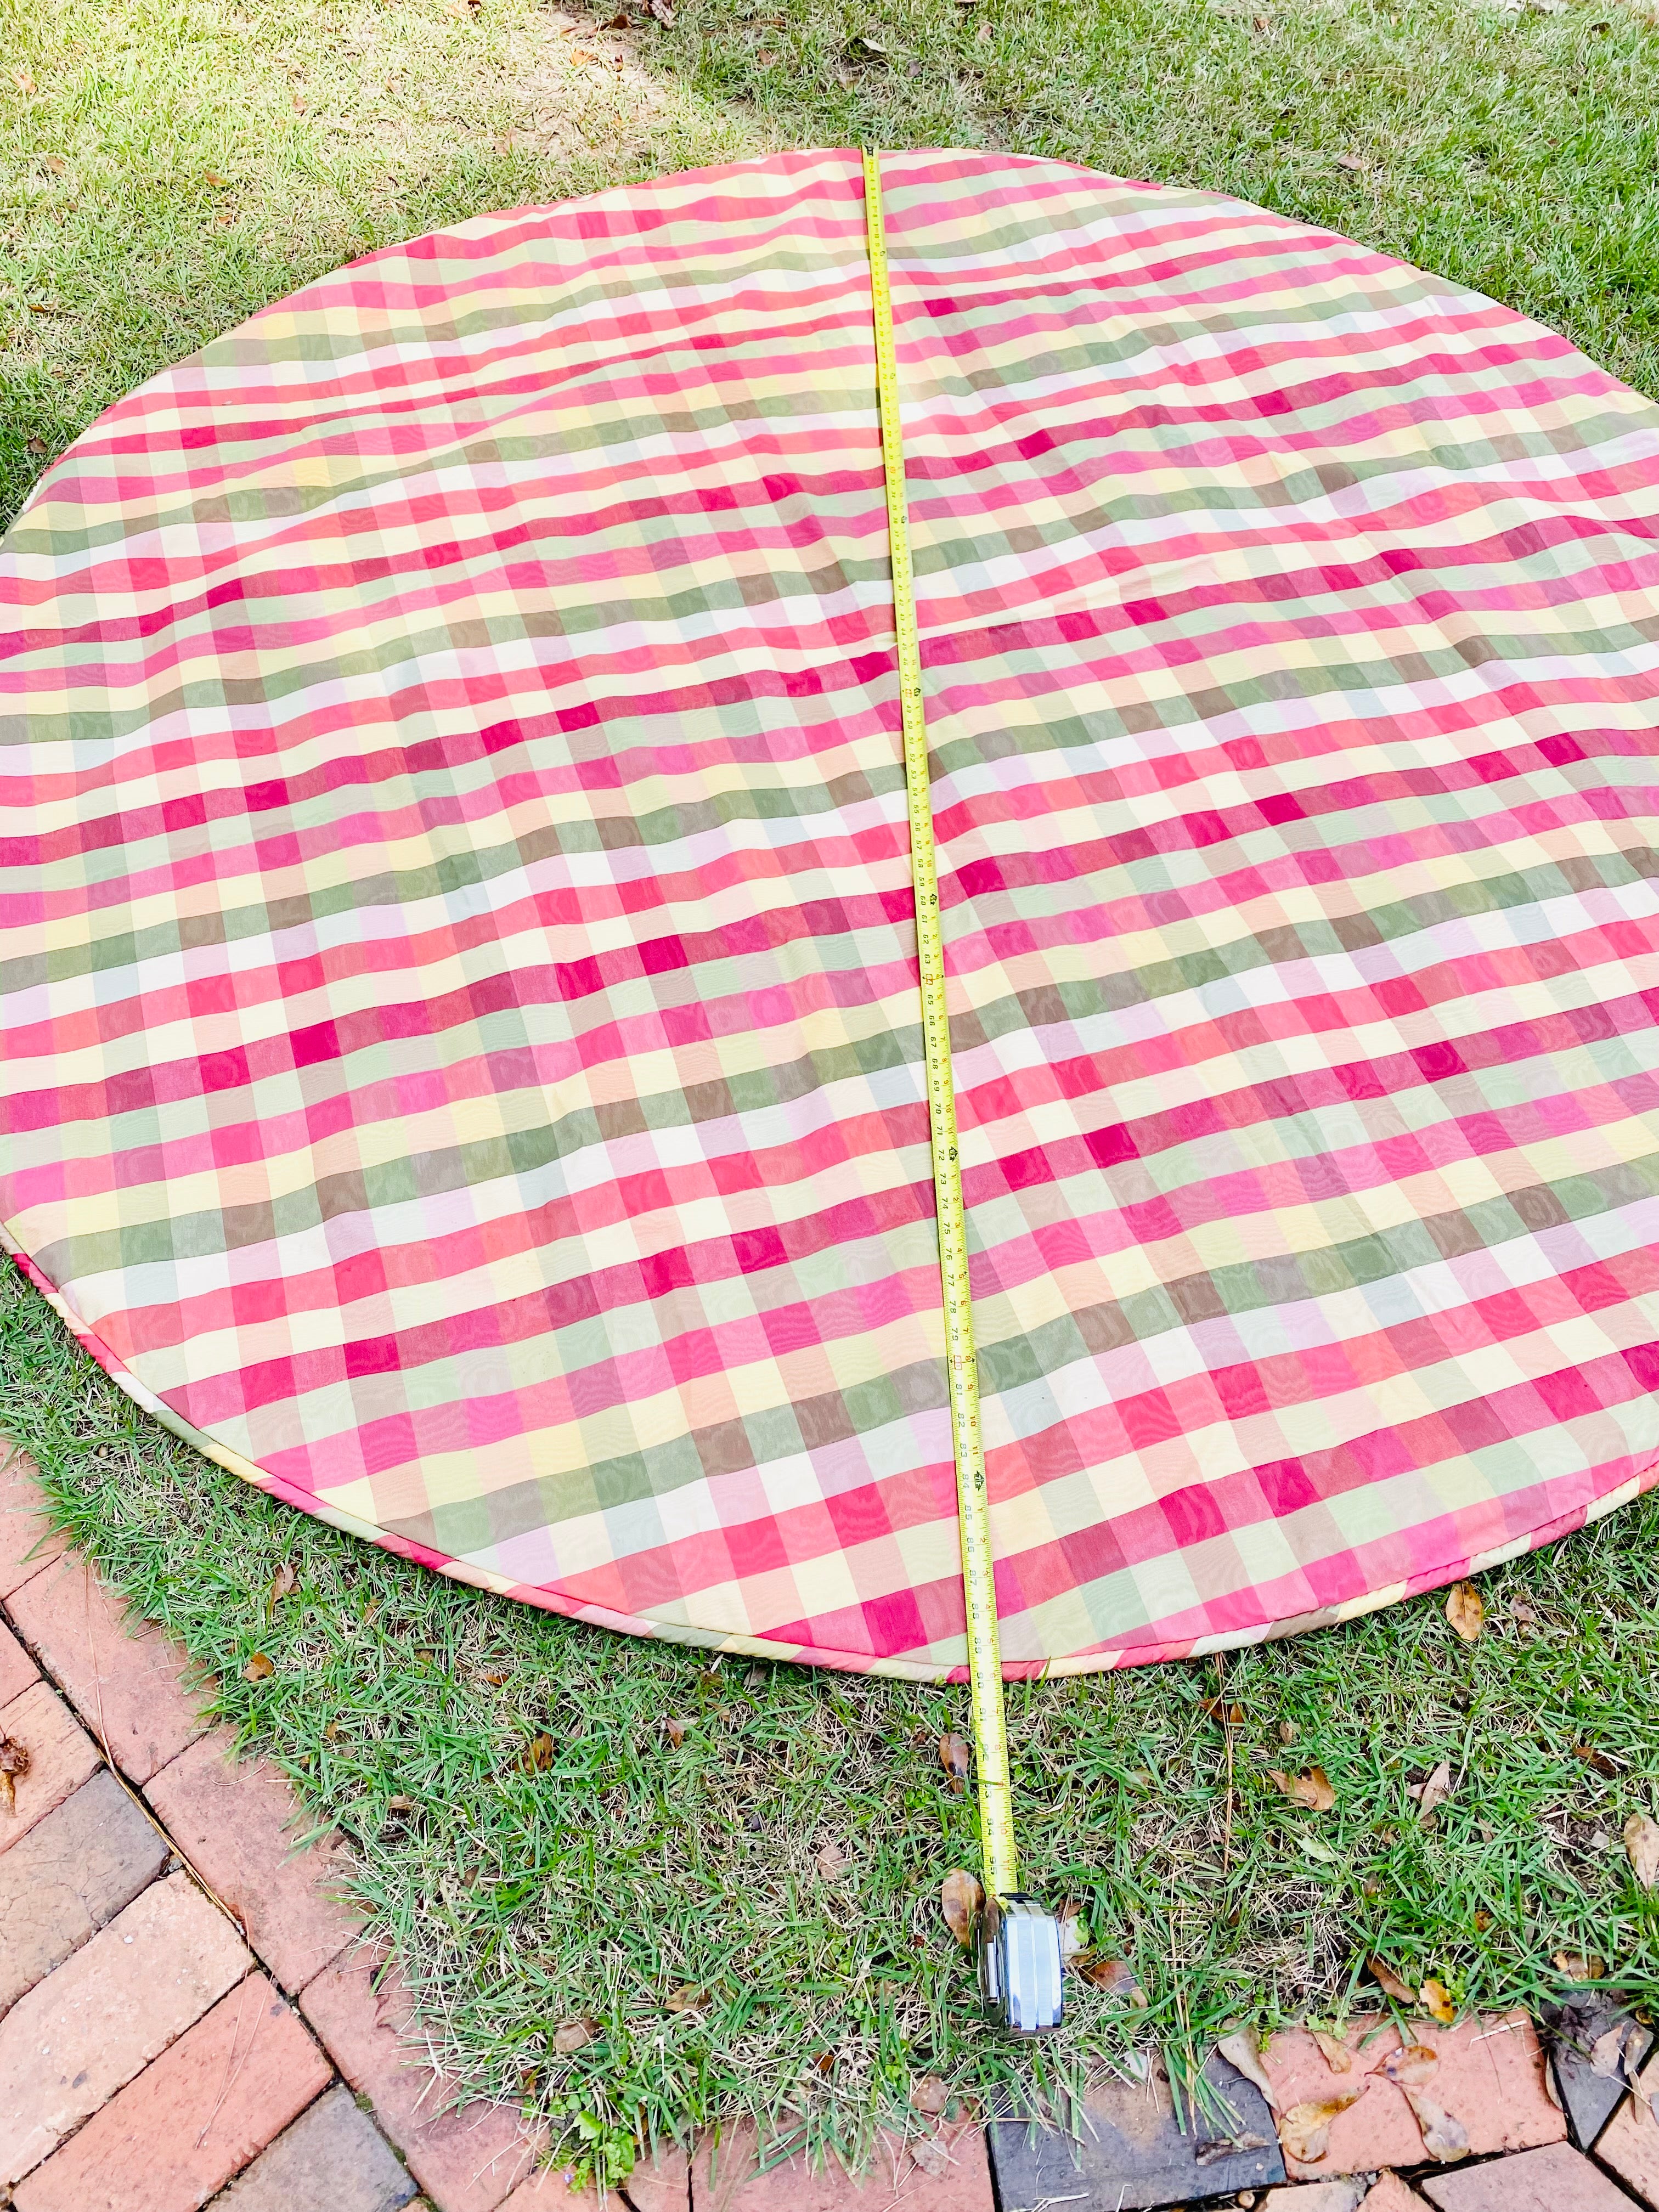 Custom 90 inch Round Tablecloth